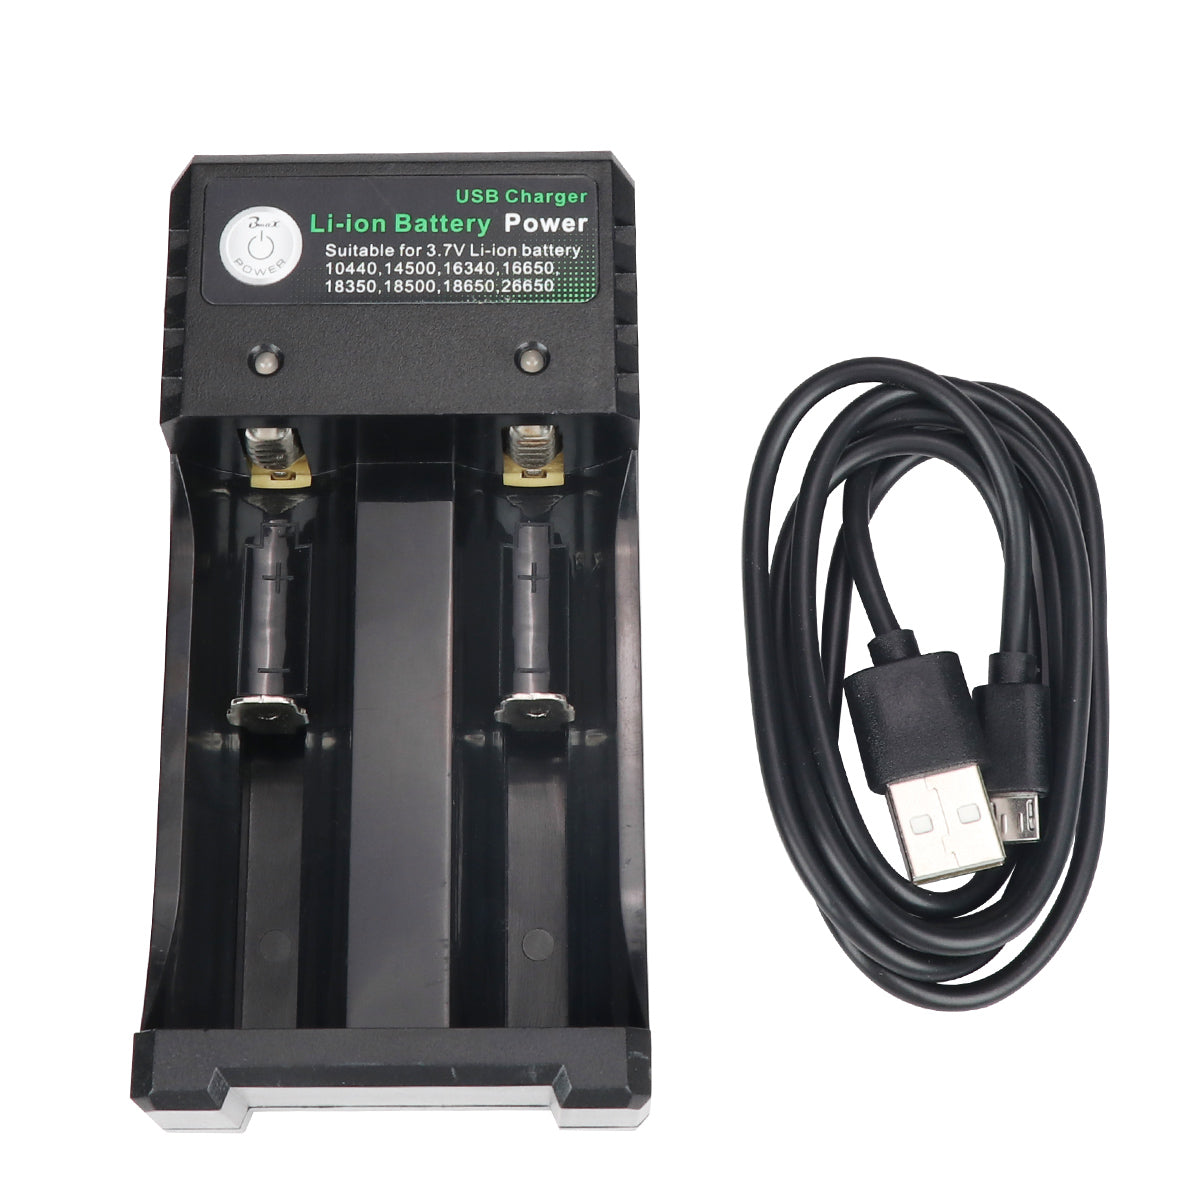 USB Port Universal Battery Charger For 3.7V 18650 26650 14500 Li-ion Battery OF 